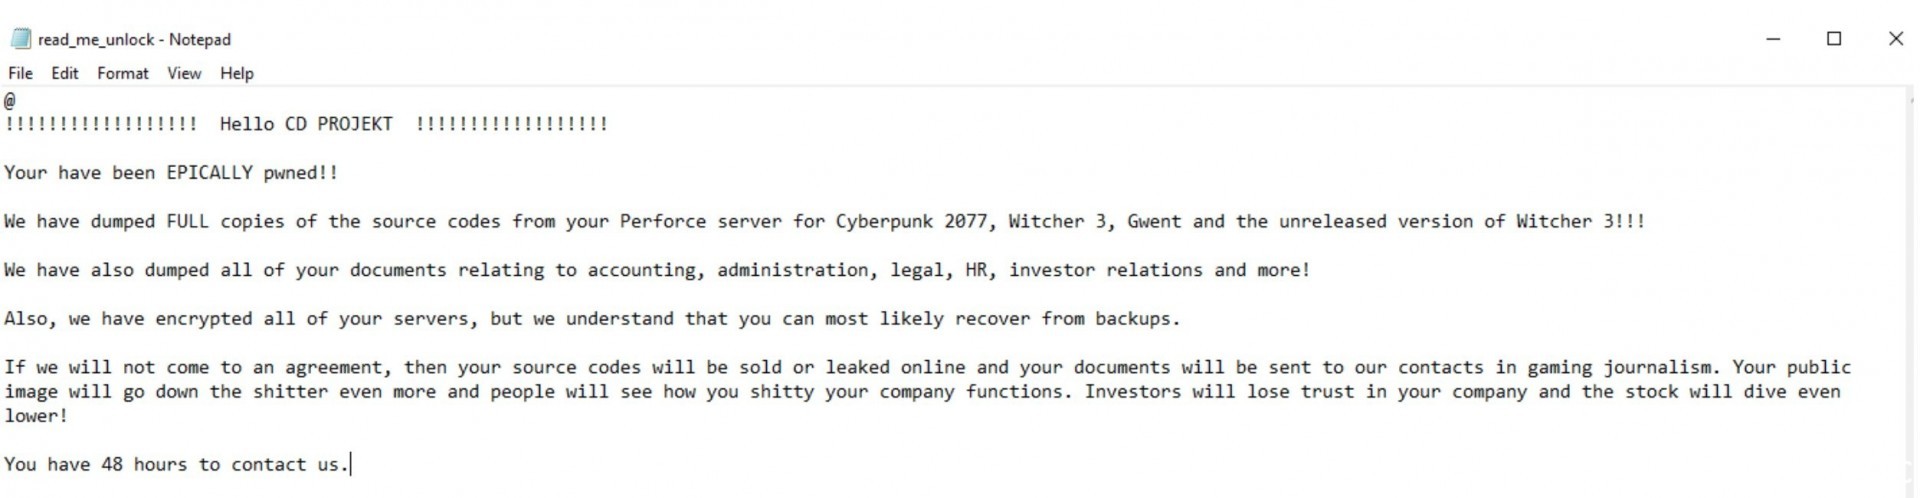 CD Projekt RED 内部网络遭骇客入侵 游戏原始码与机密资料外泄